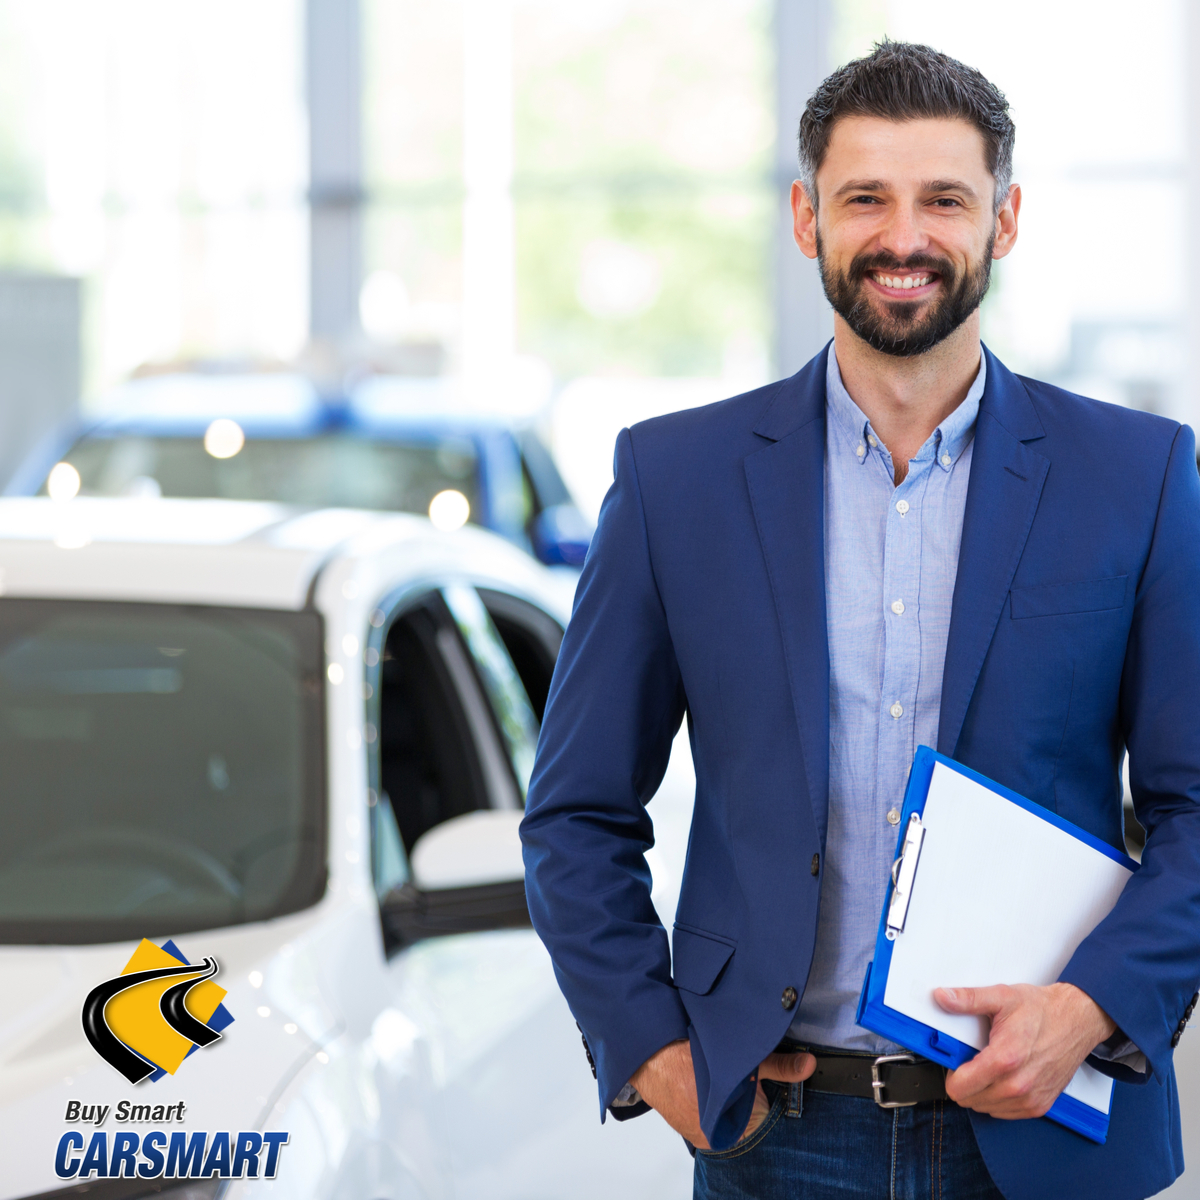 A Car Dealer Should Encourage a Positive Experience